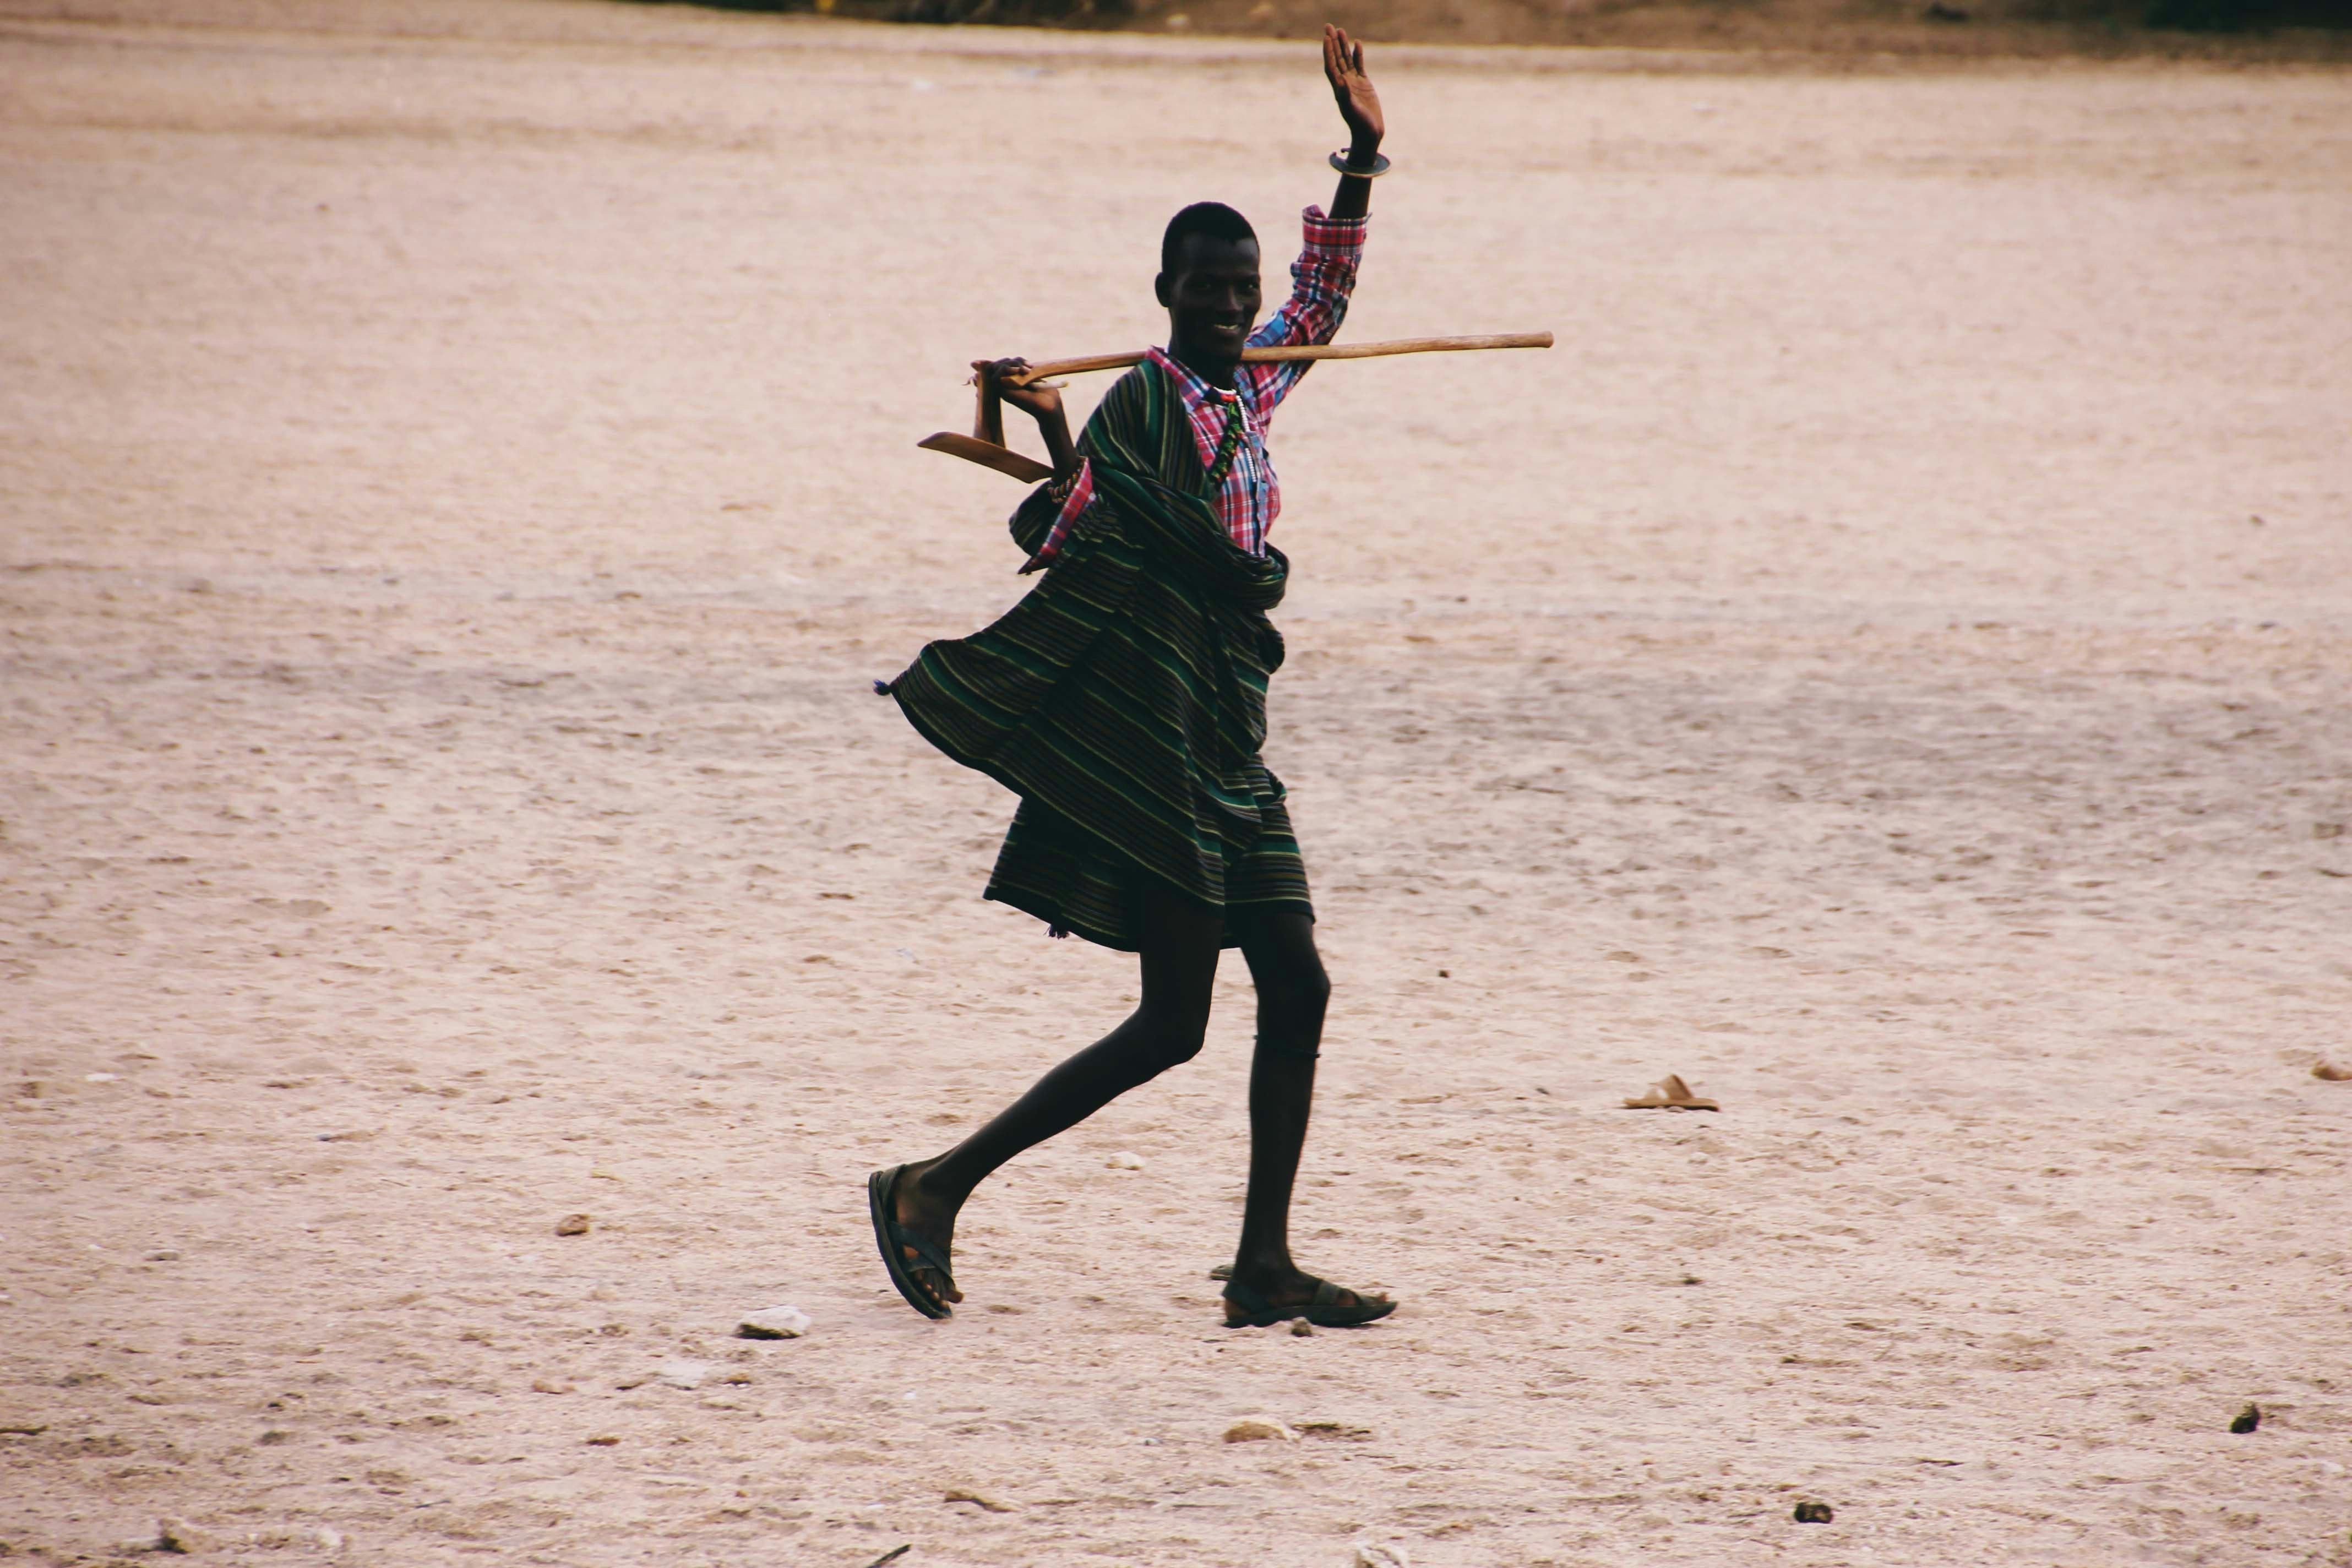 A Turkana man smiles and weaves at the camera as walks away